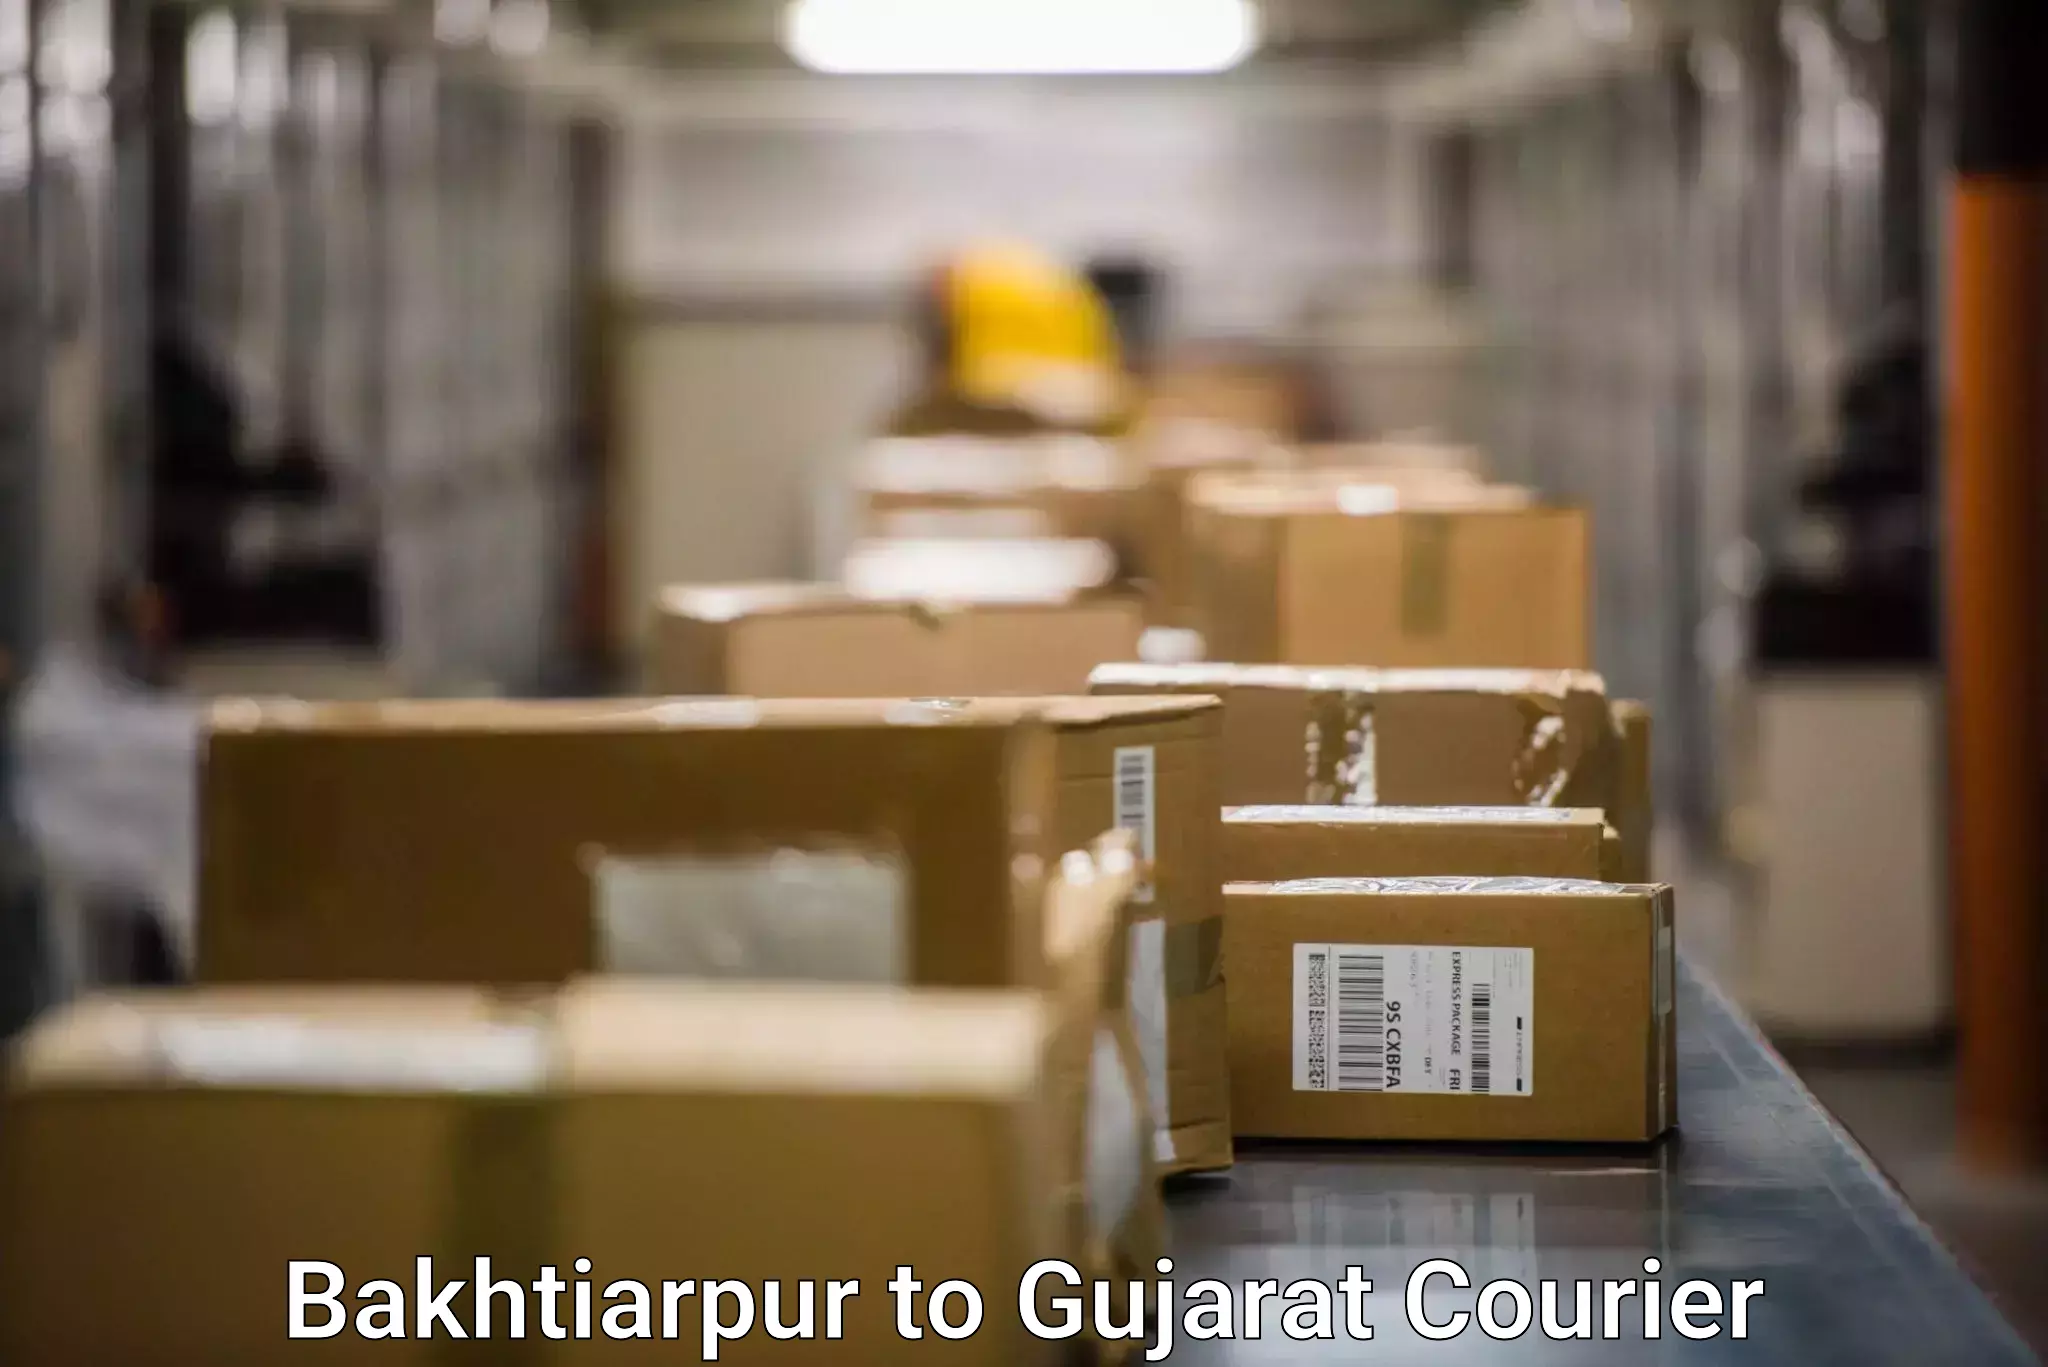 Pharmaceutical courier Bakhtiarpur to Gandhinagar